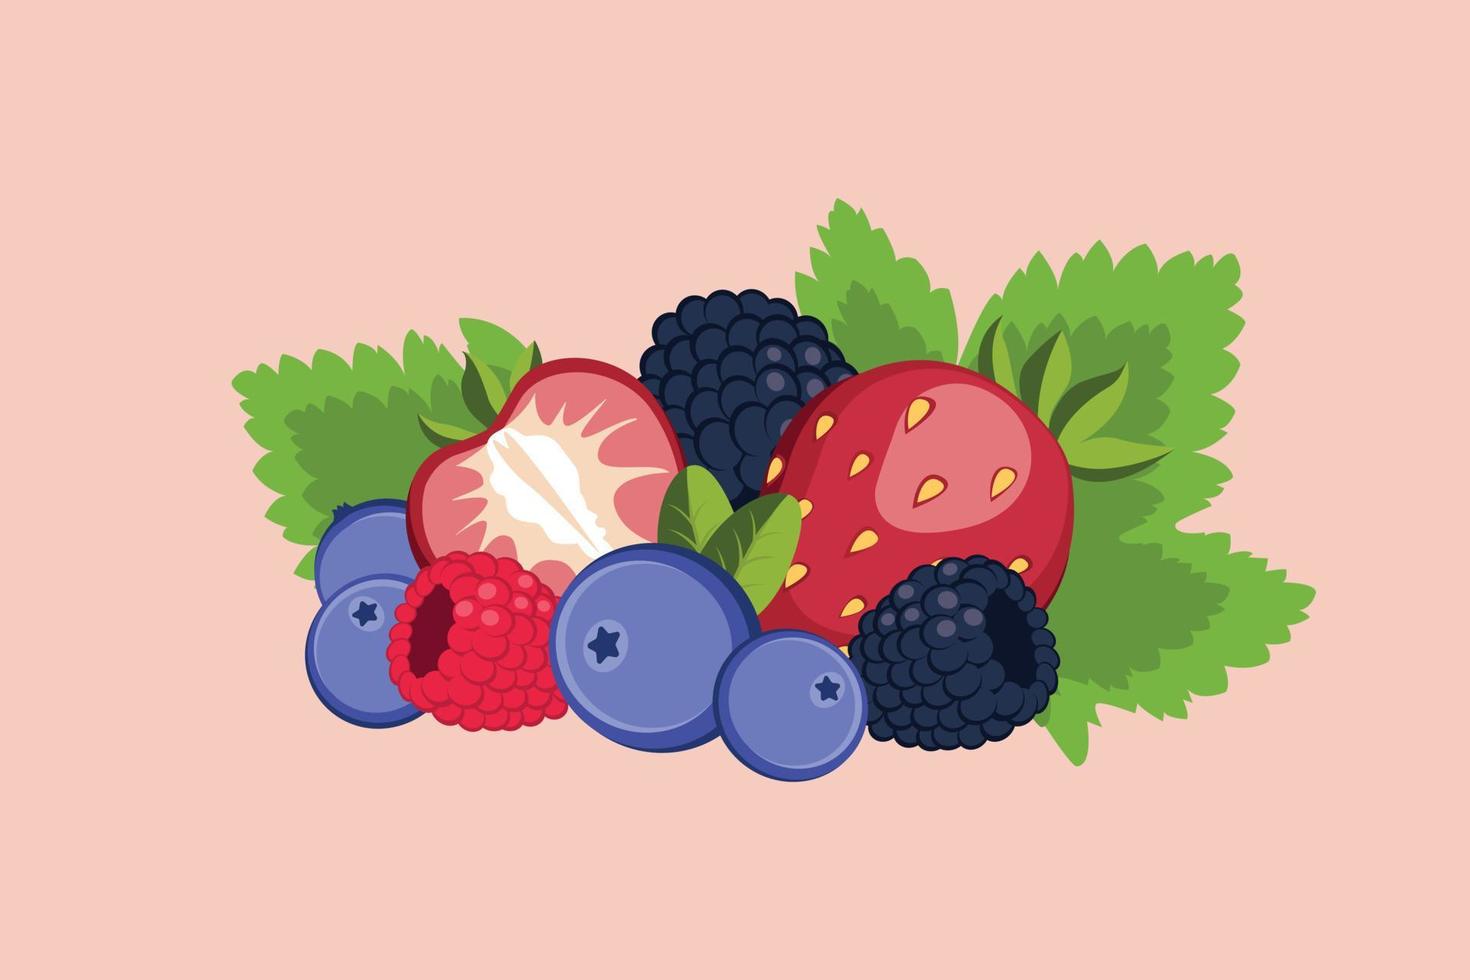 Vektor frische Beeren. Waldbeeren. Beerenfruchtset mit Trauben reifer Beeren und Bildern von grünen Blättern. Erdbeeren, Himbeeren, Brombeeren und Blaubeeren.